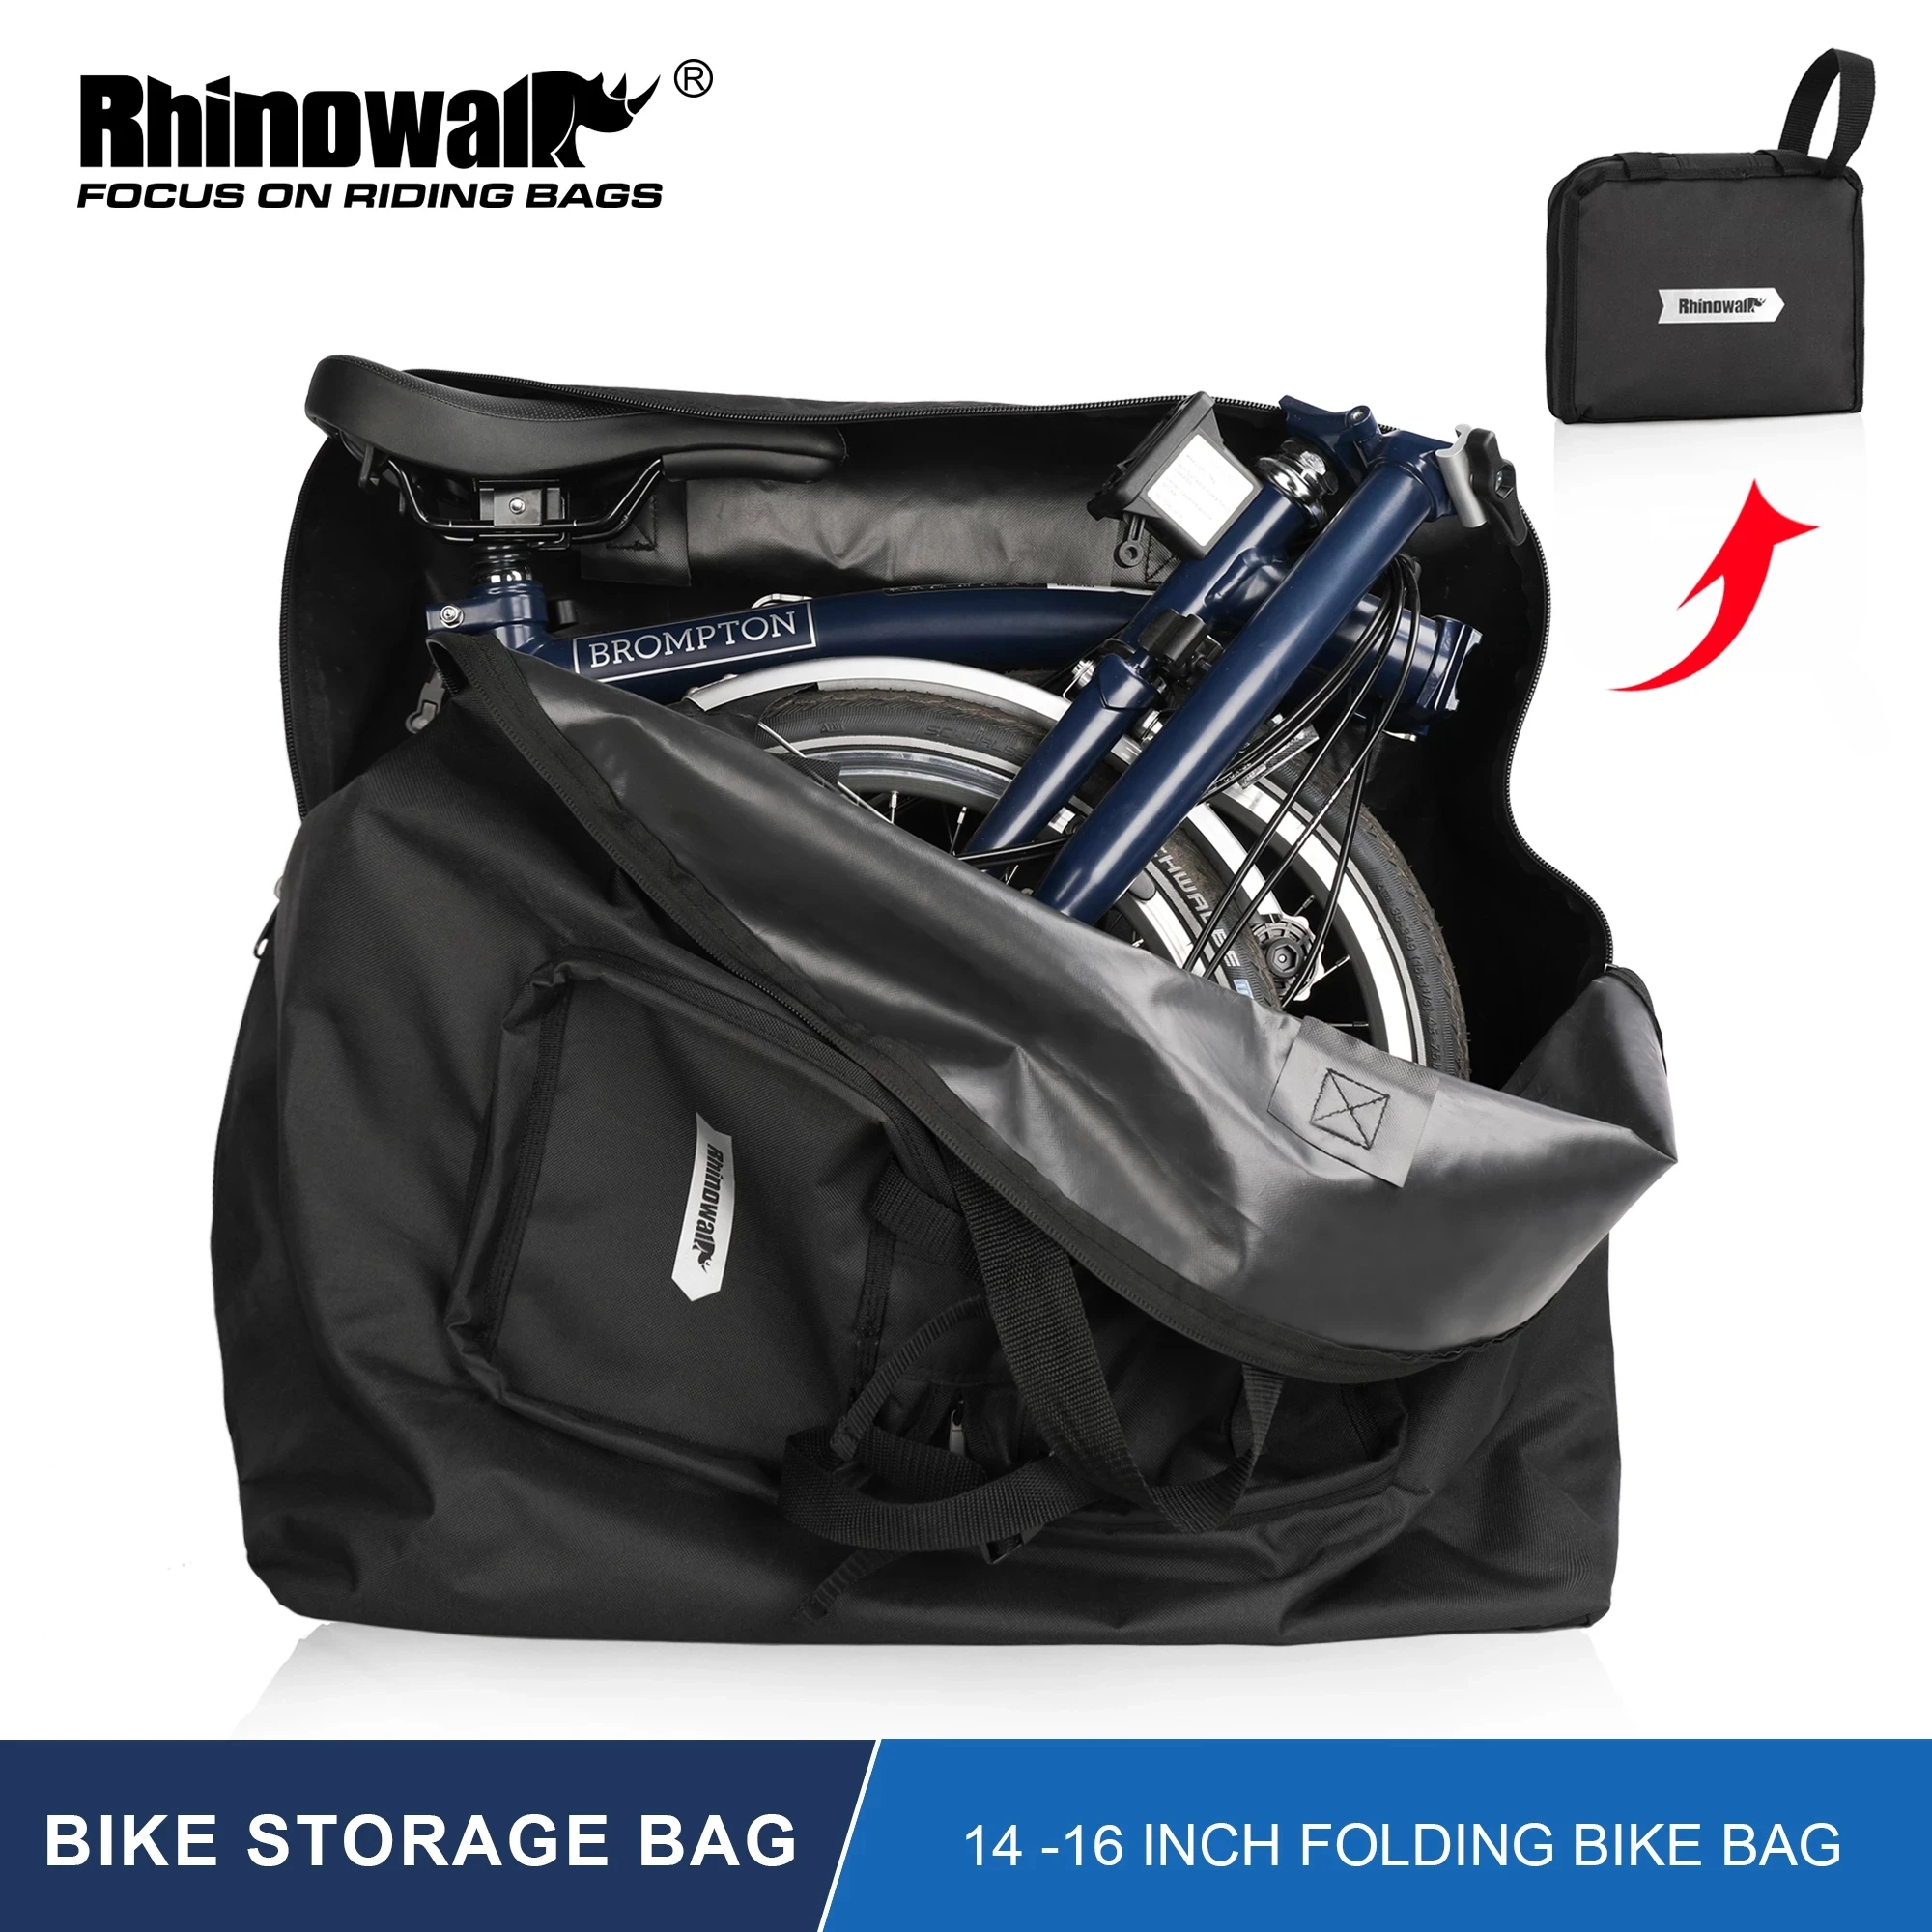 Pilt /1134/Rhinowalk-folding-bike-kott-14-20-tolli-kokkupandava-1_share/upload.jpeg